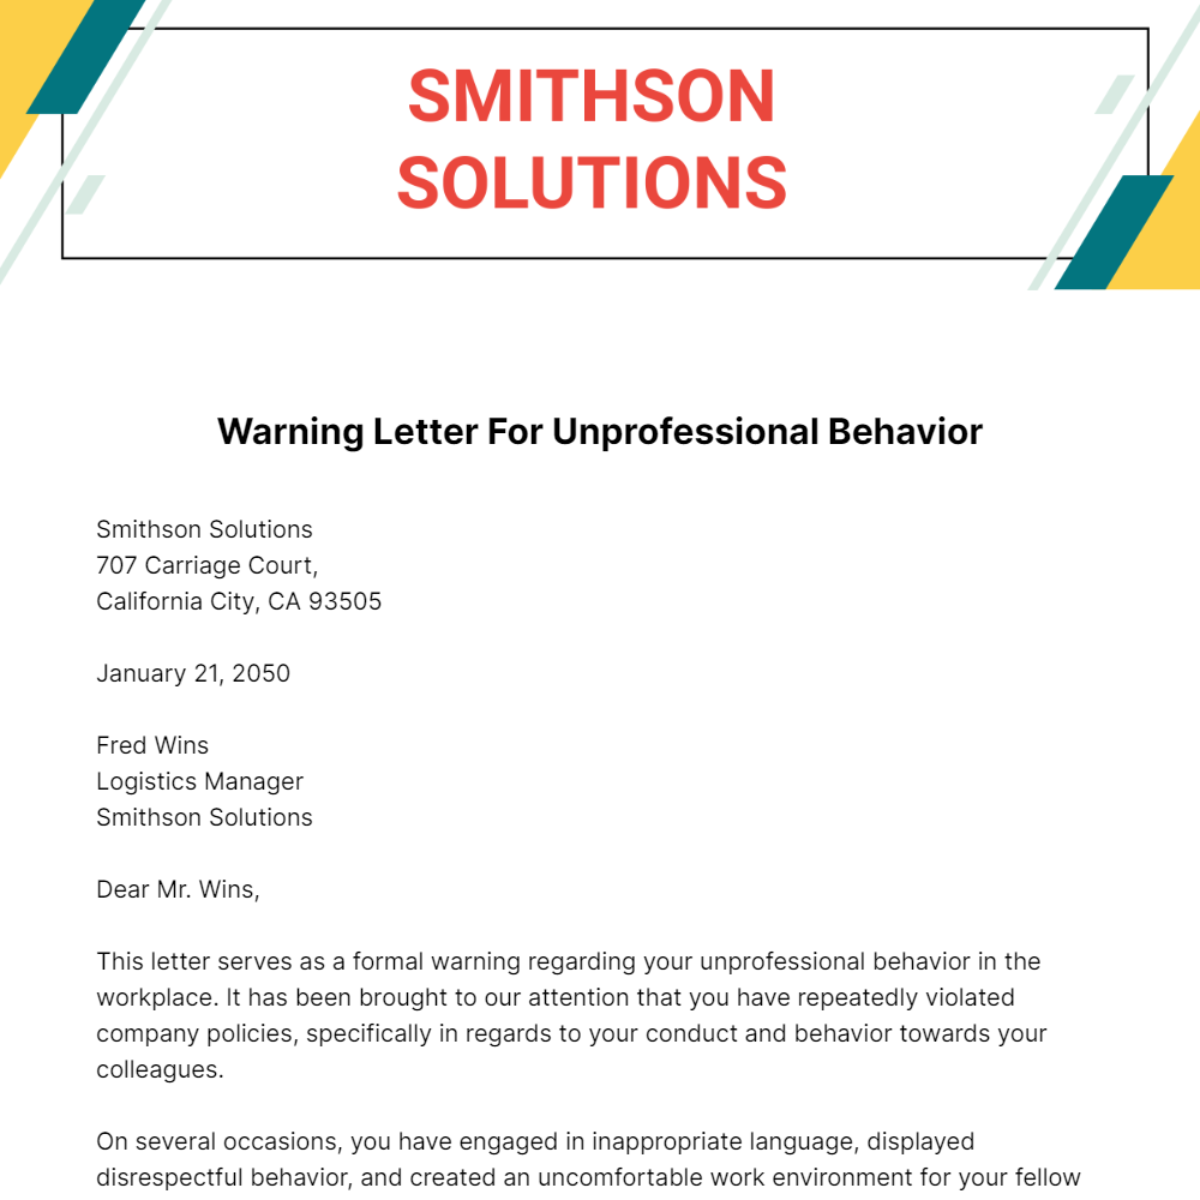 Warning Letter for Unprofessional Behavior Template